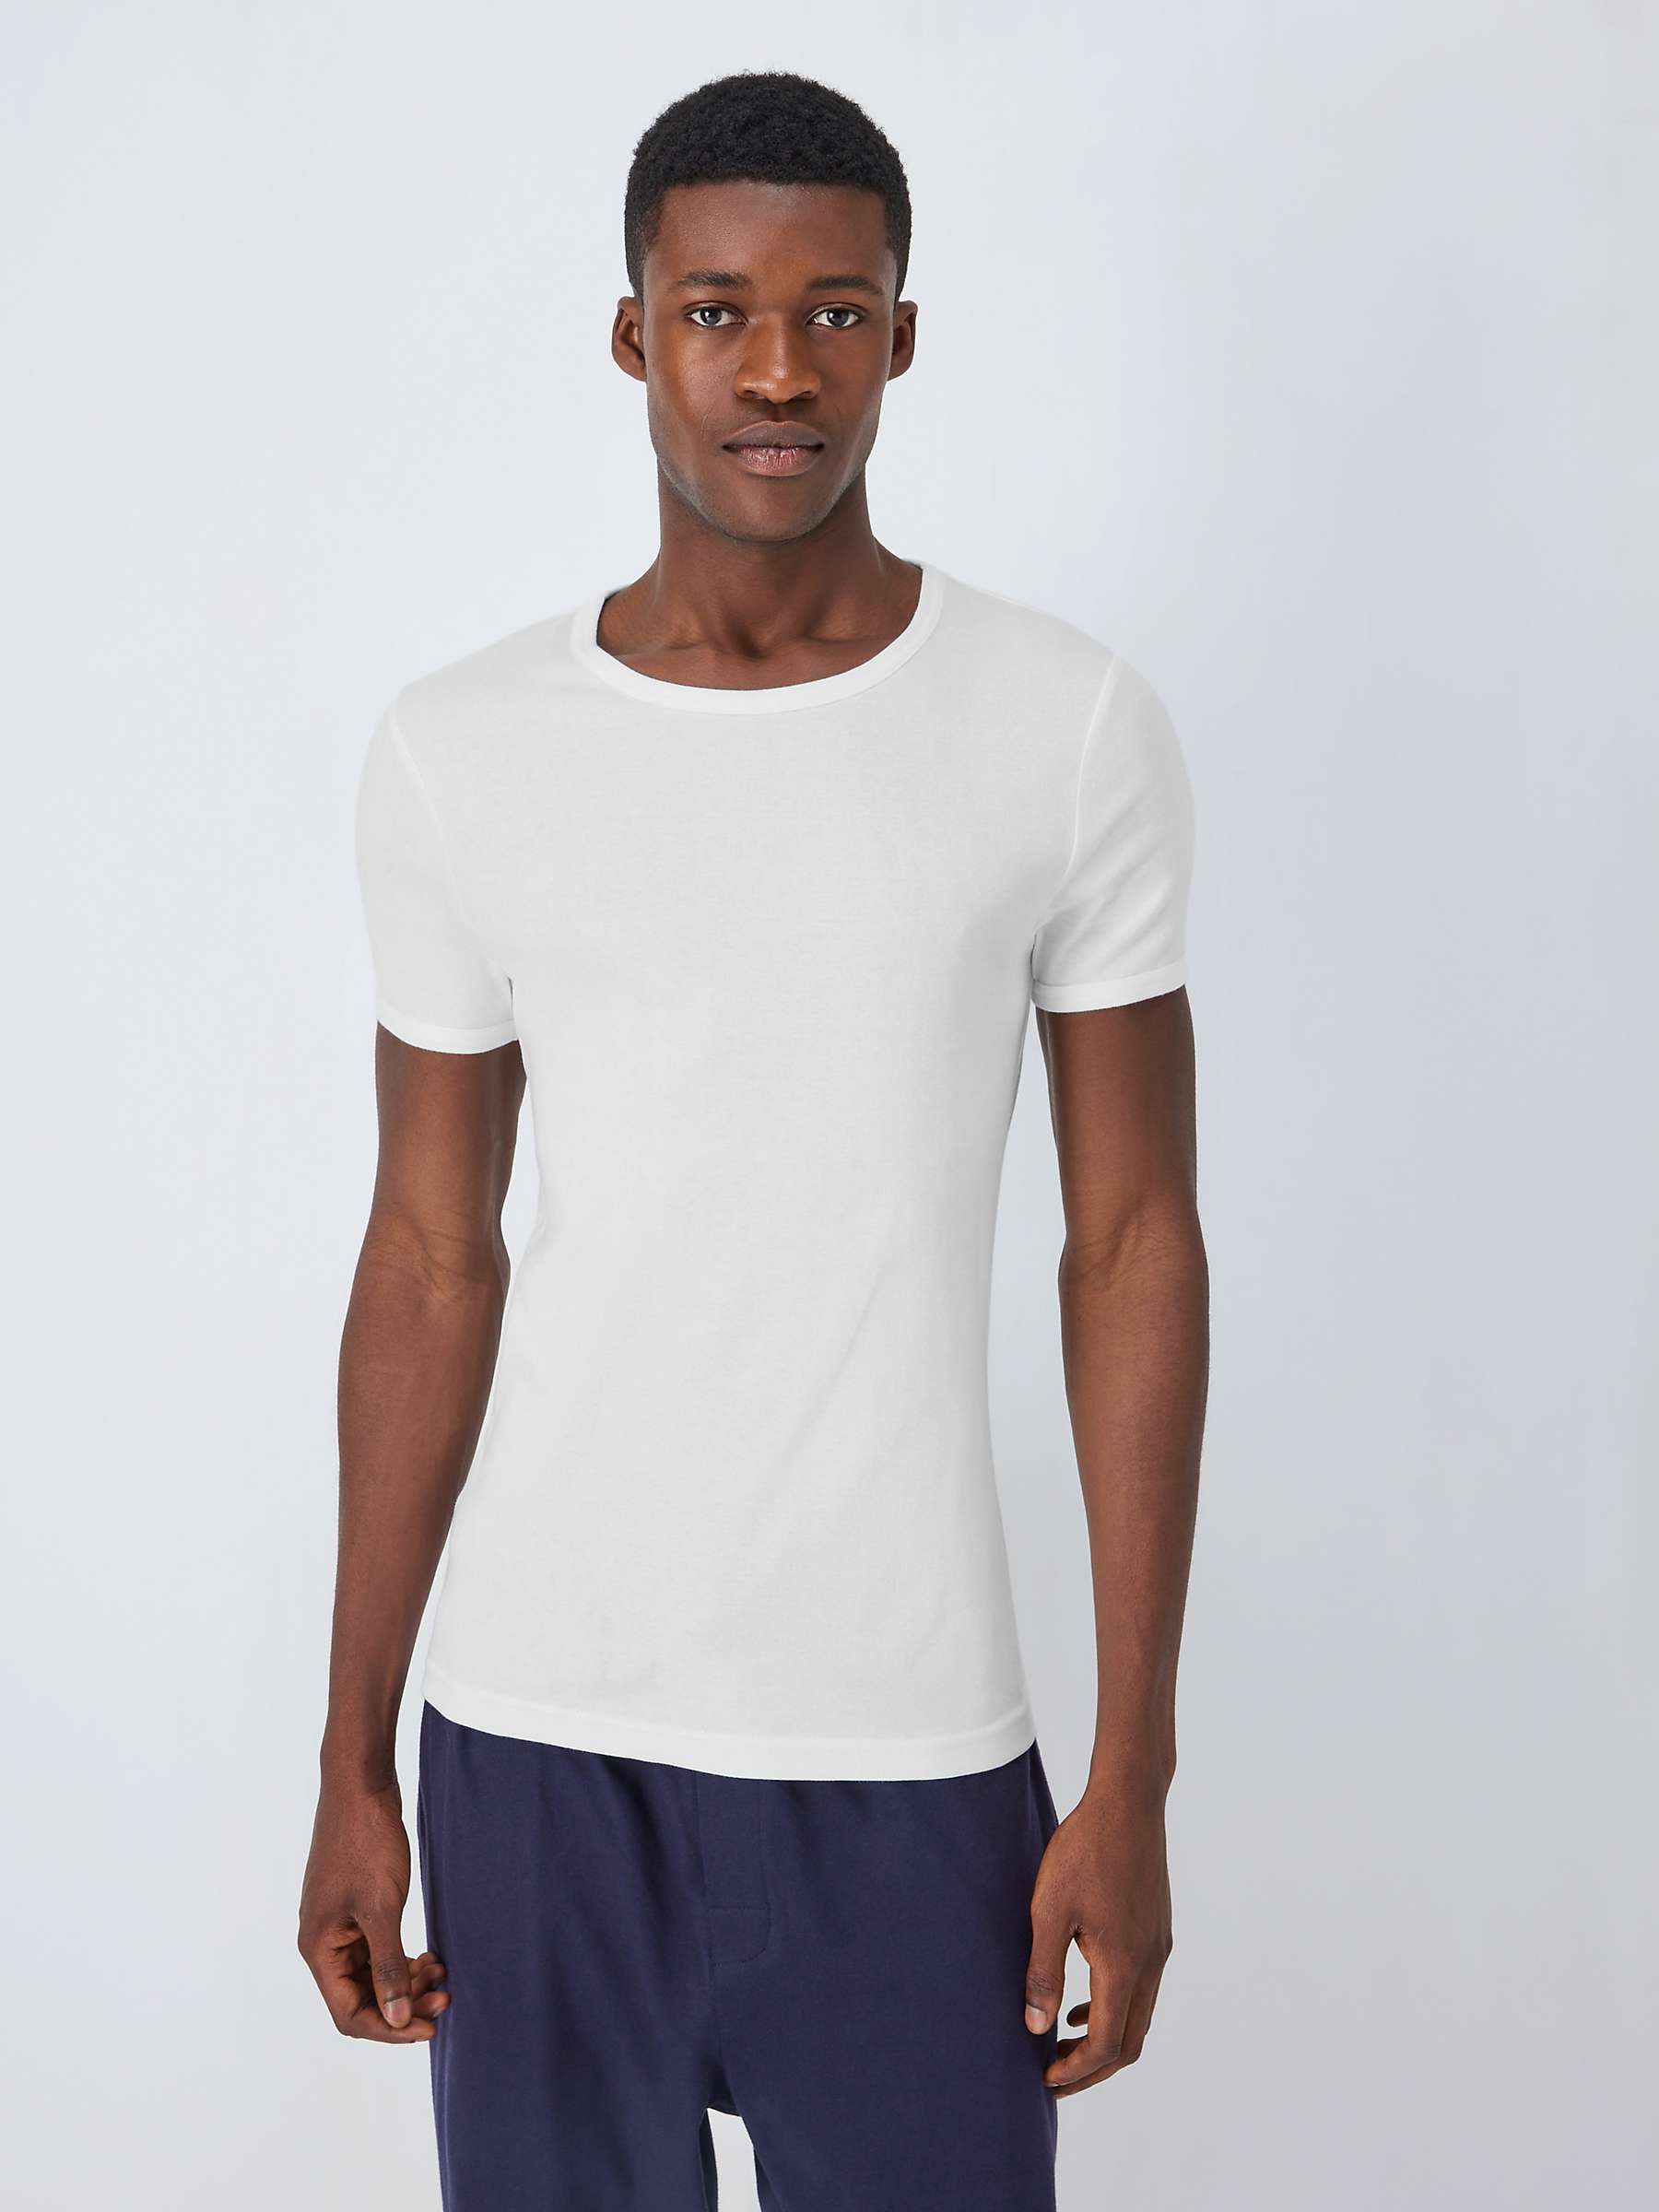 Buy John Lewis Organic Cotton Short Sleeve Vest, Pack of 2, White Online at johnlewis.com